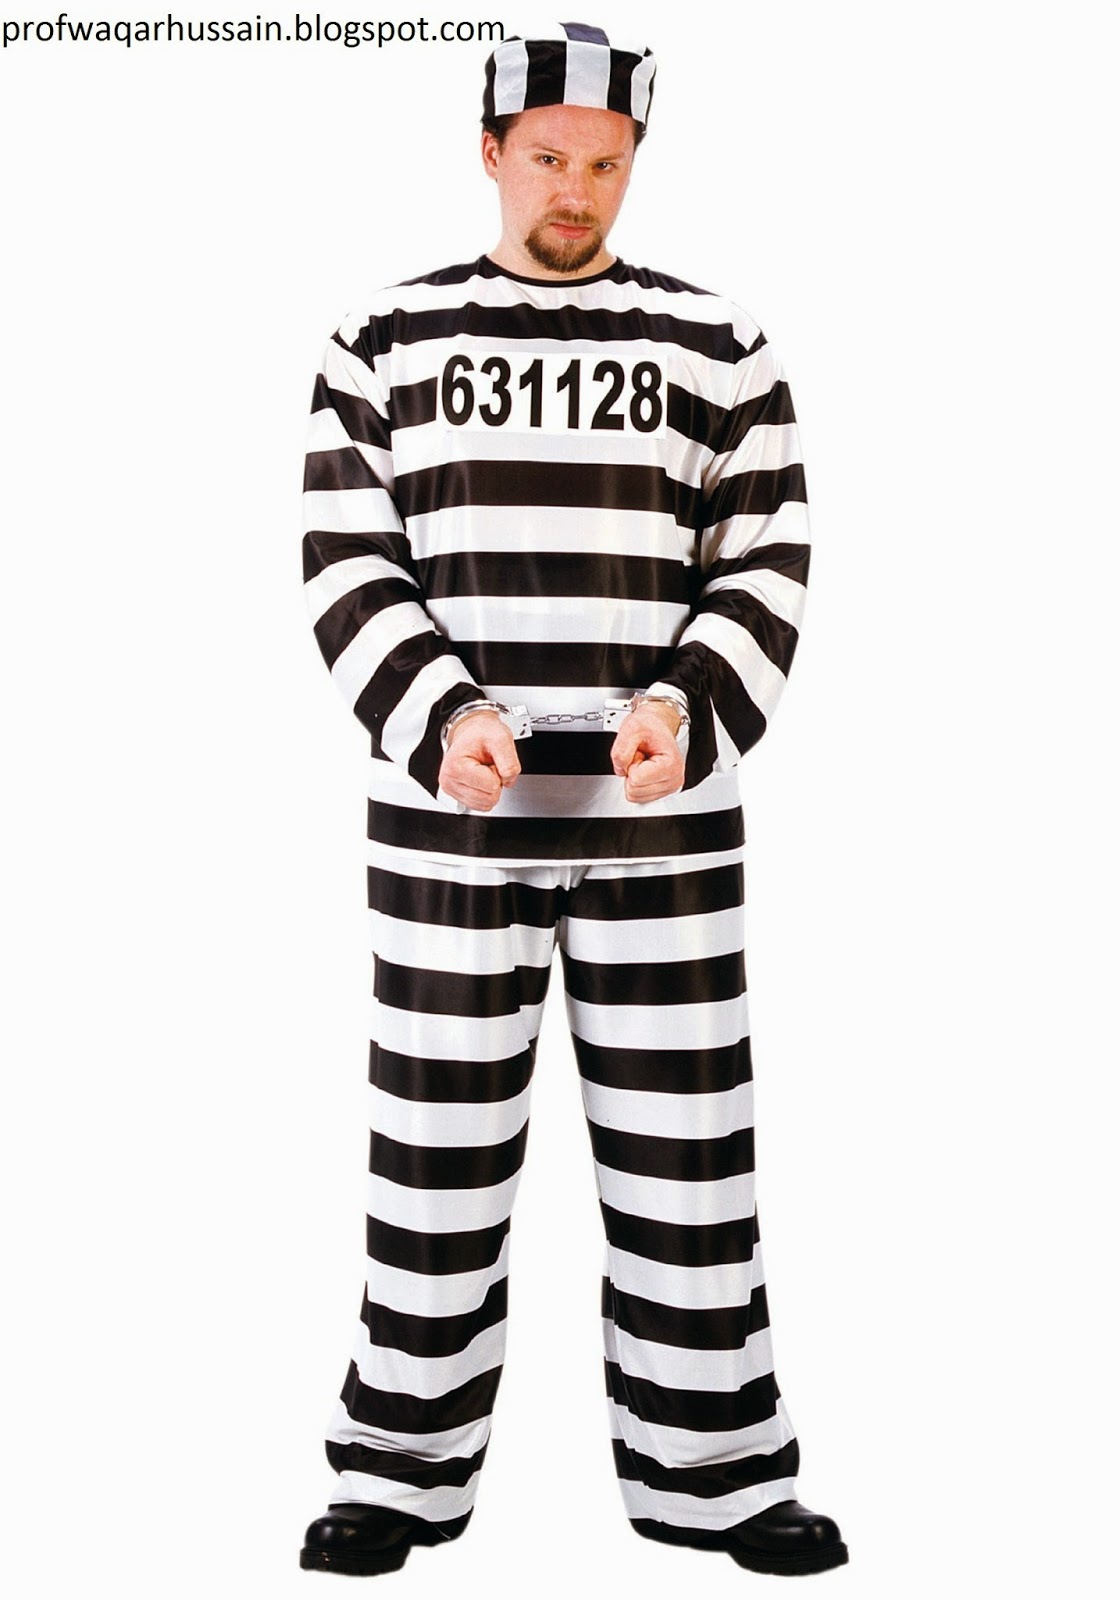 Articles: Why prisoner uses white and black stripe